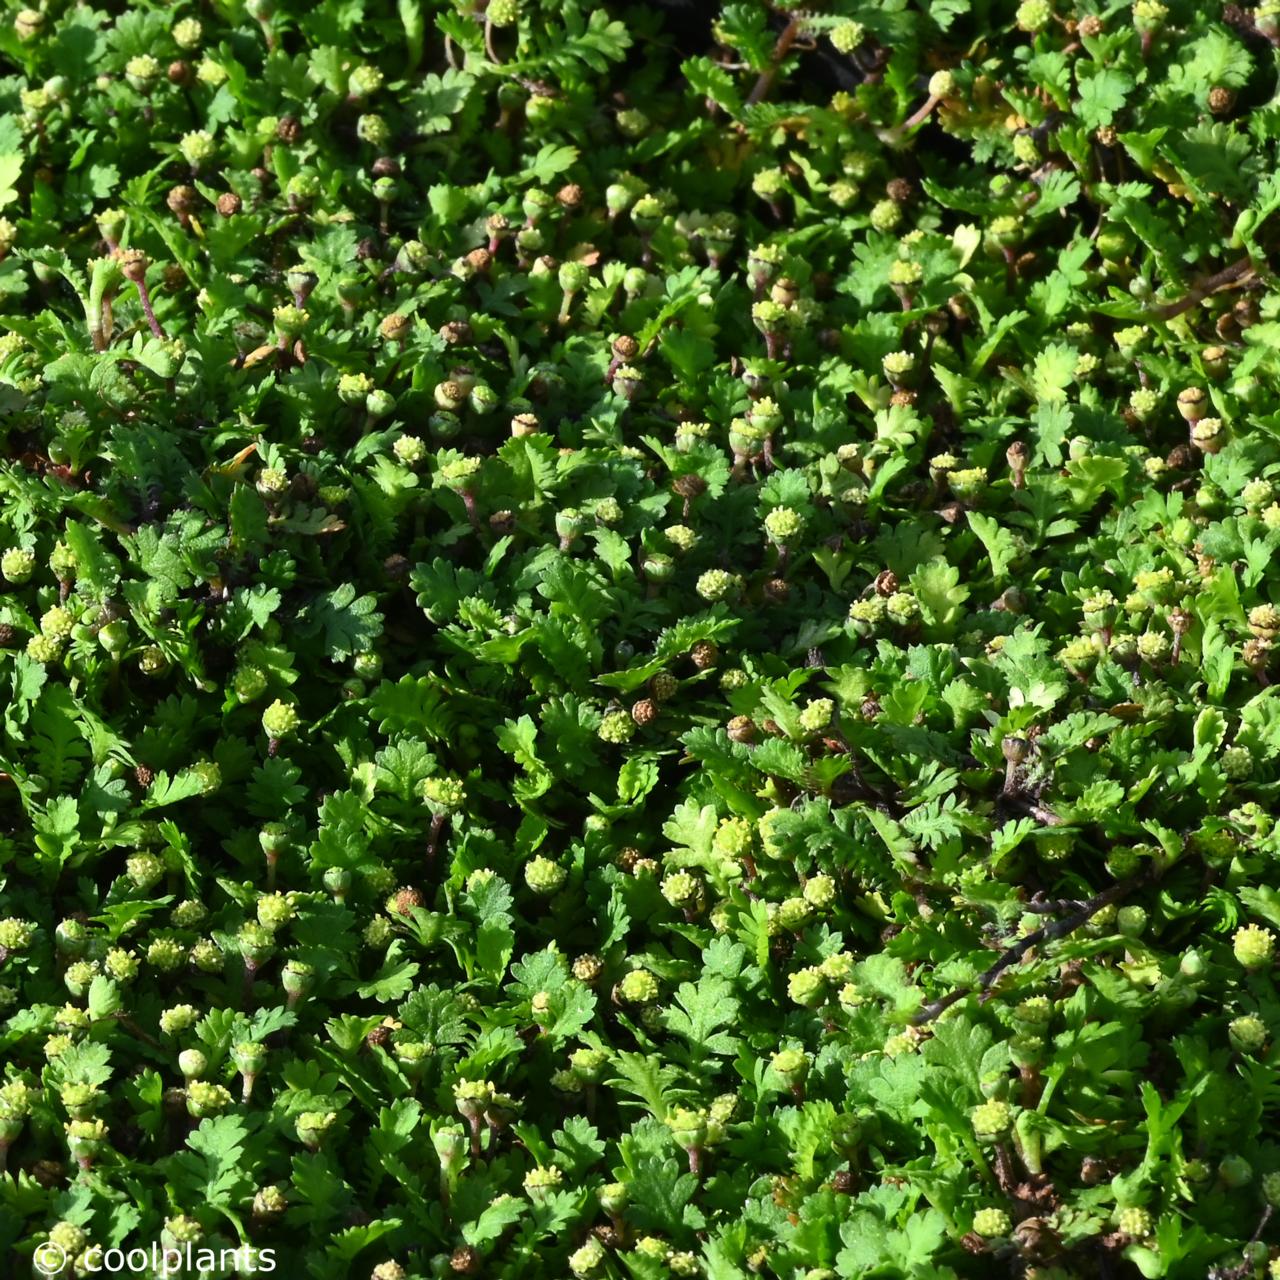 Leptinella squalida 'Minima' plant